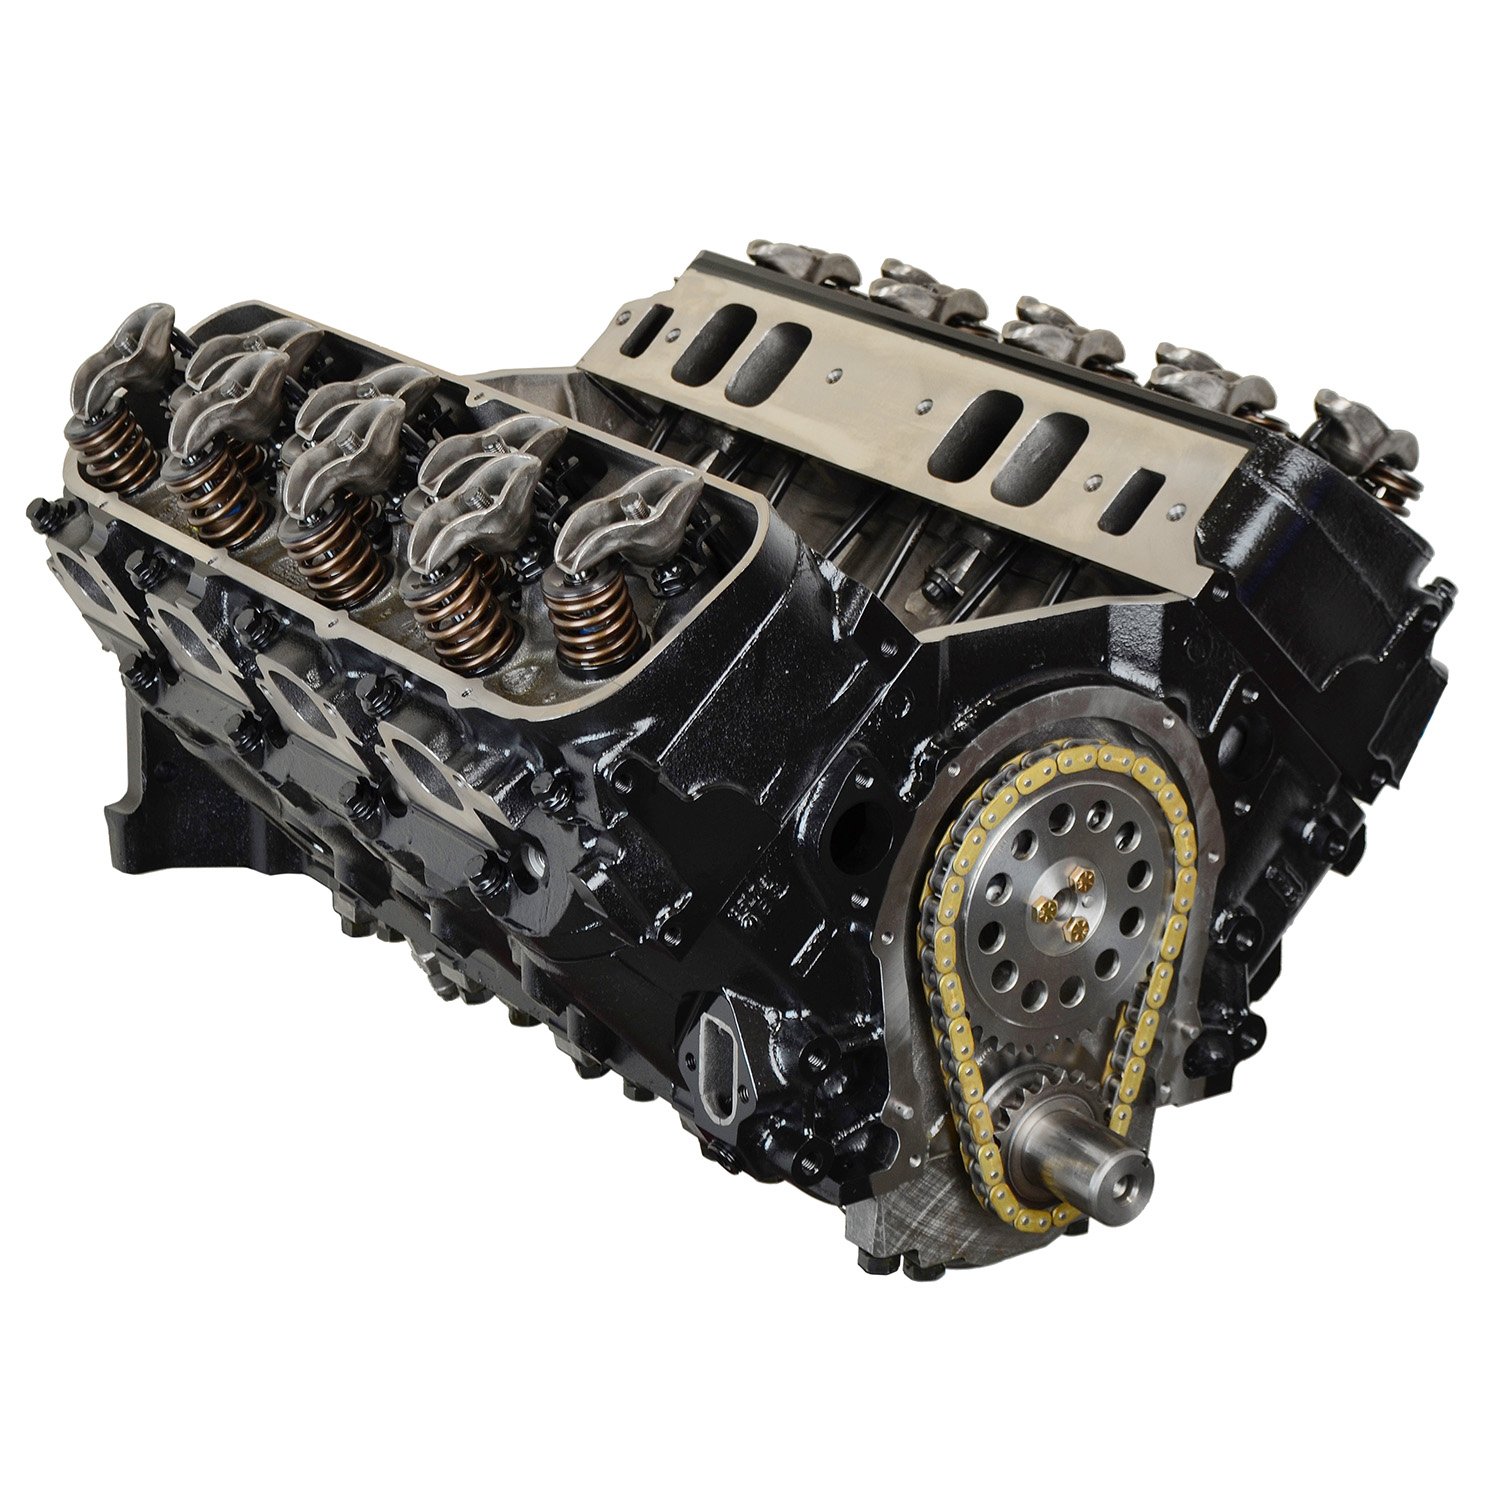 High Performance Marine Crate Engine Big Block Chevy 502ci / 515HP / 570TQ